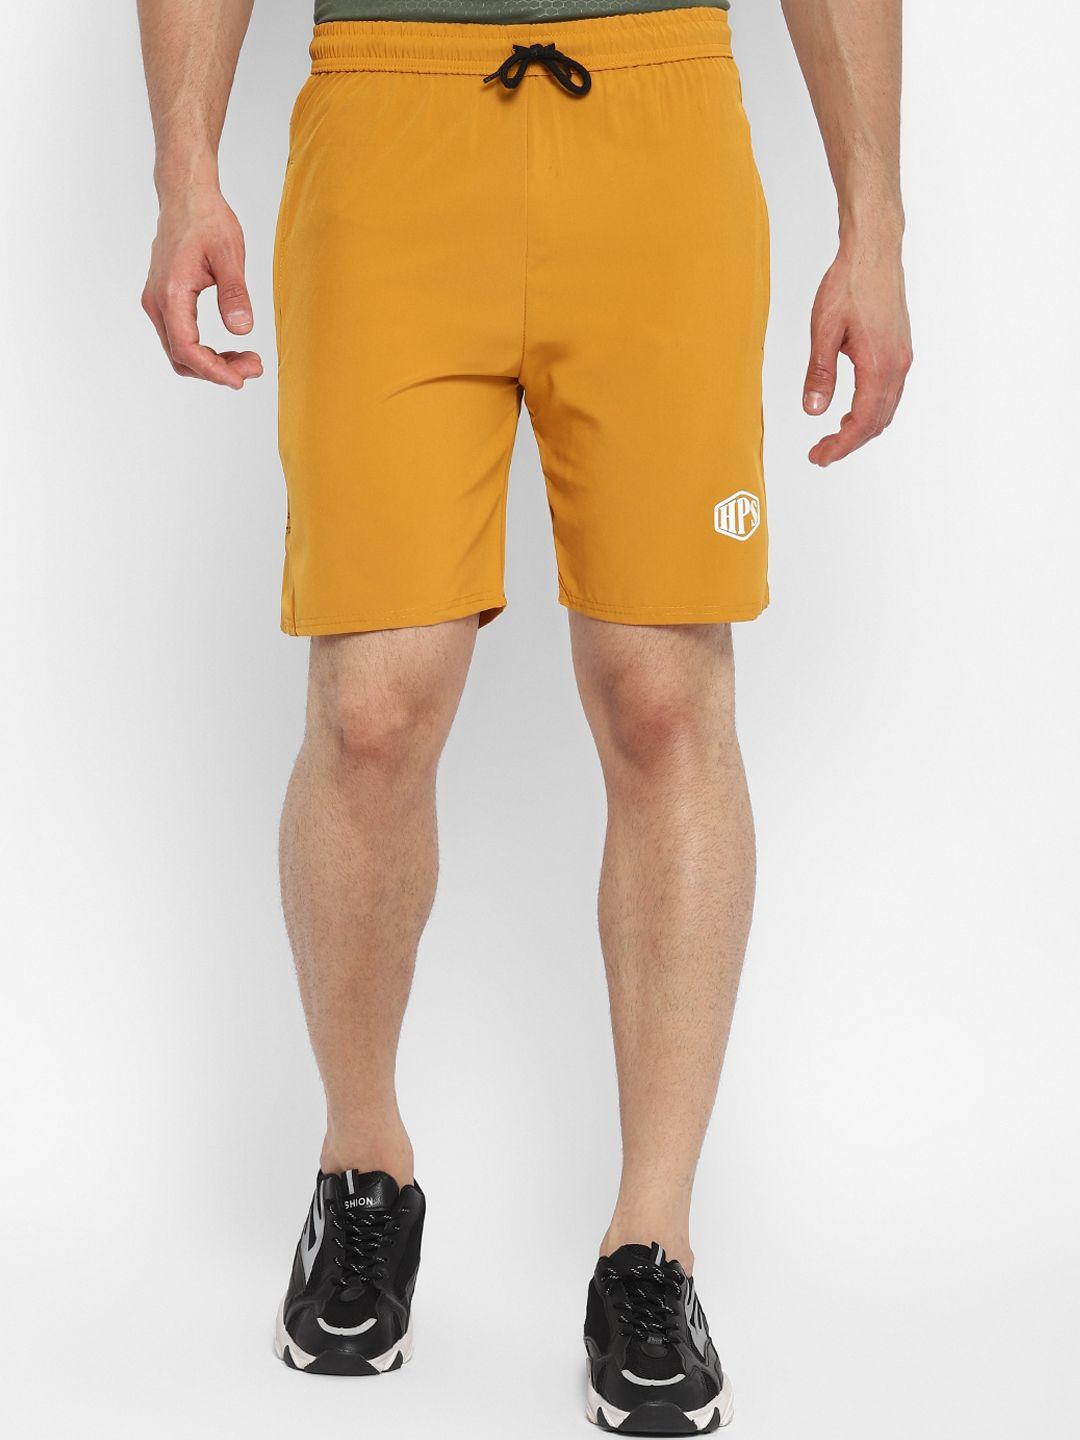 hps sports men yellow running sports shorts